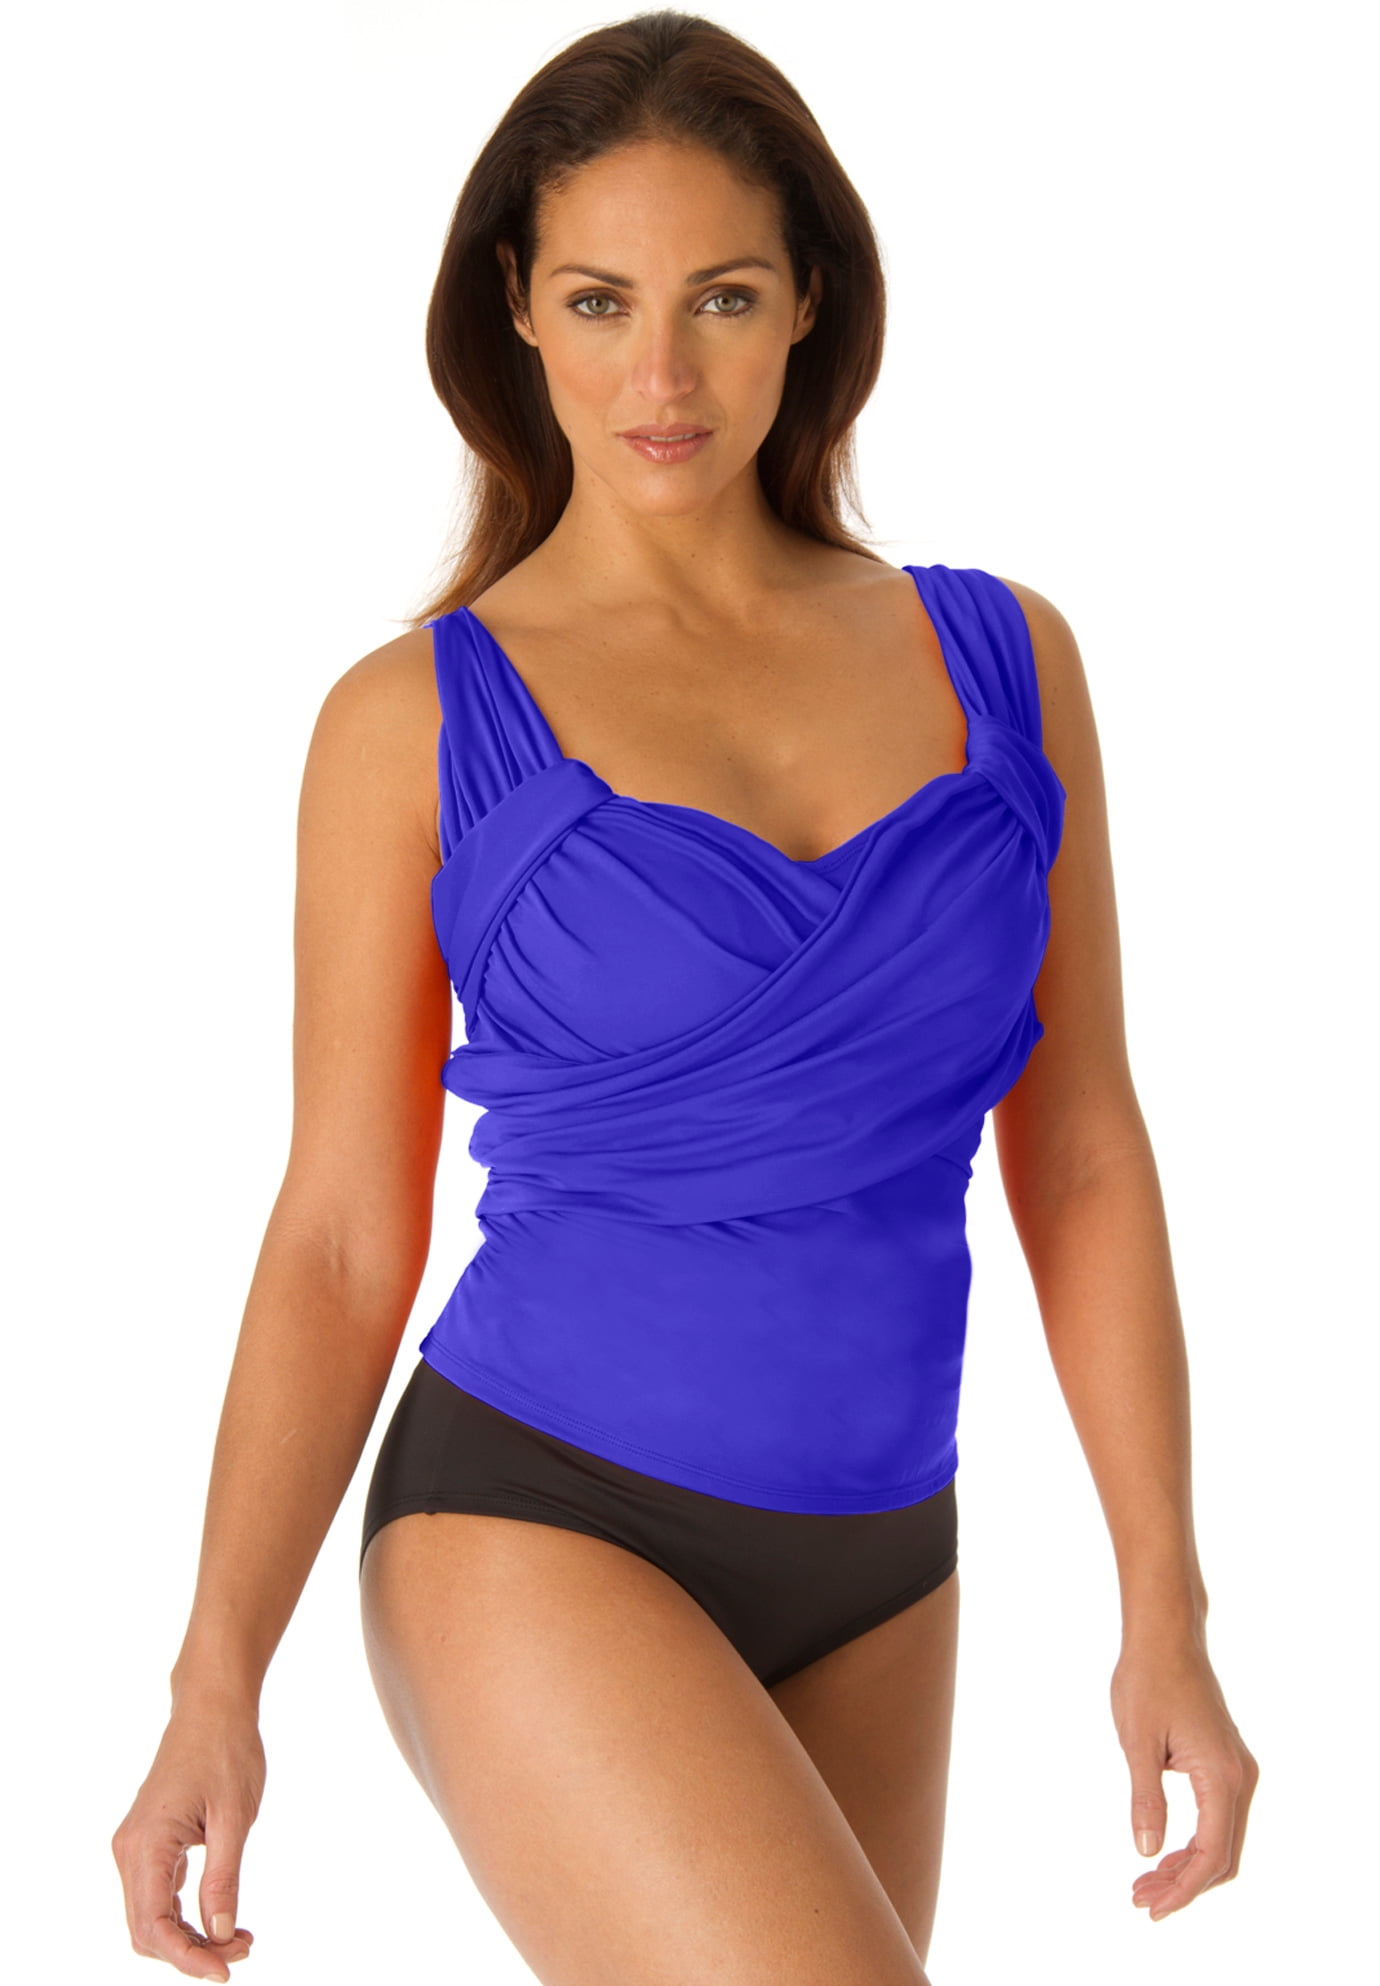 20 18 Chlorine Resistant Blue White Purple Violet Swimwear Size 14